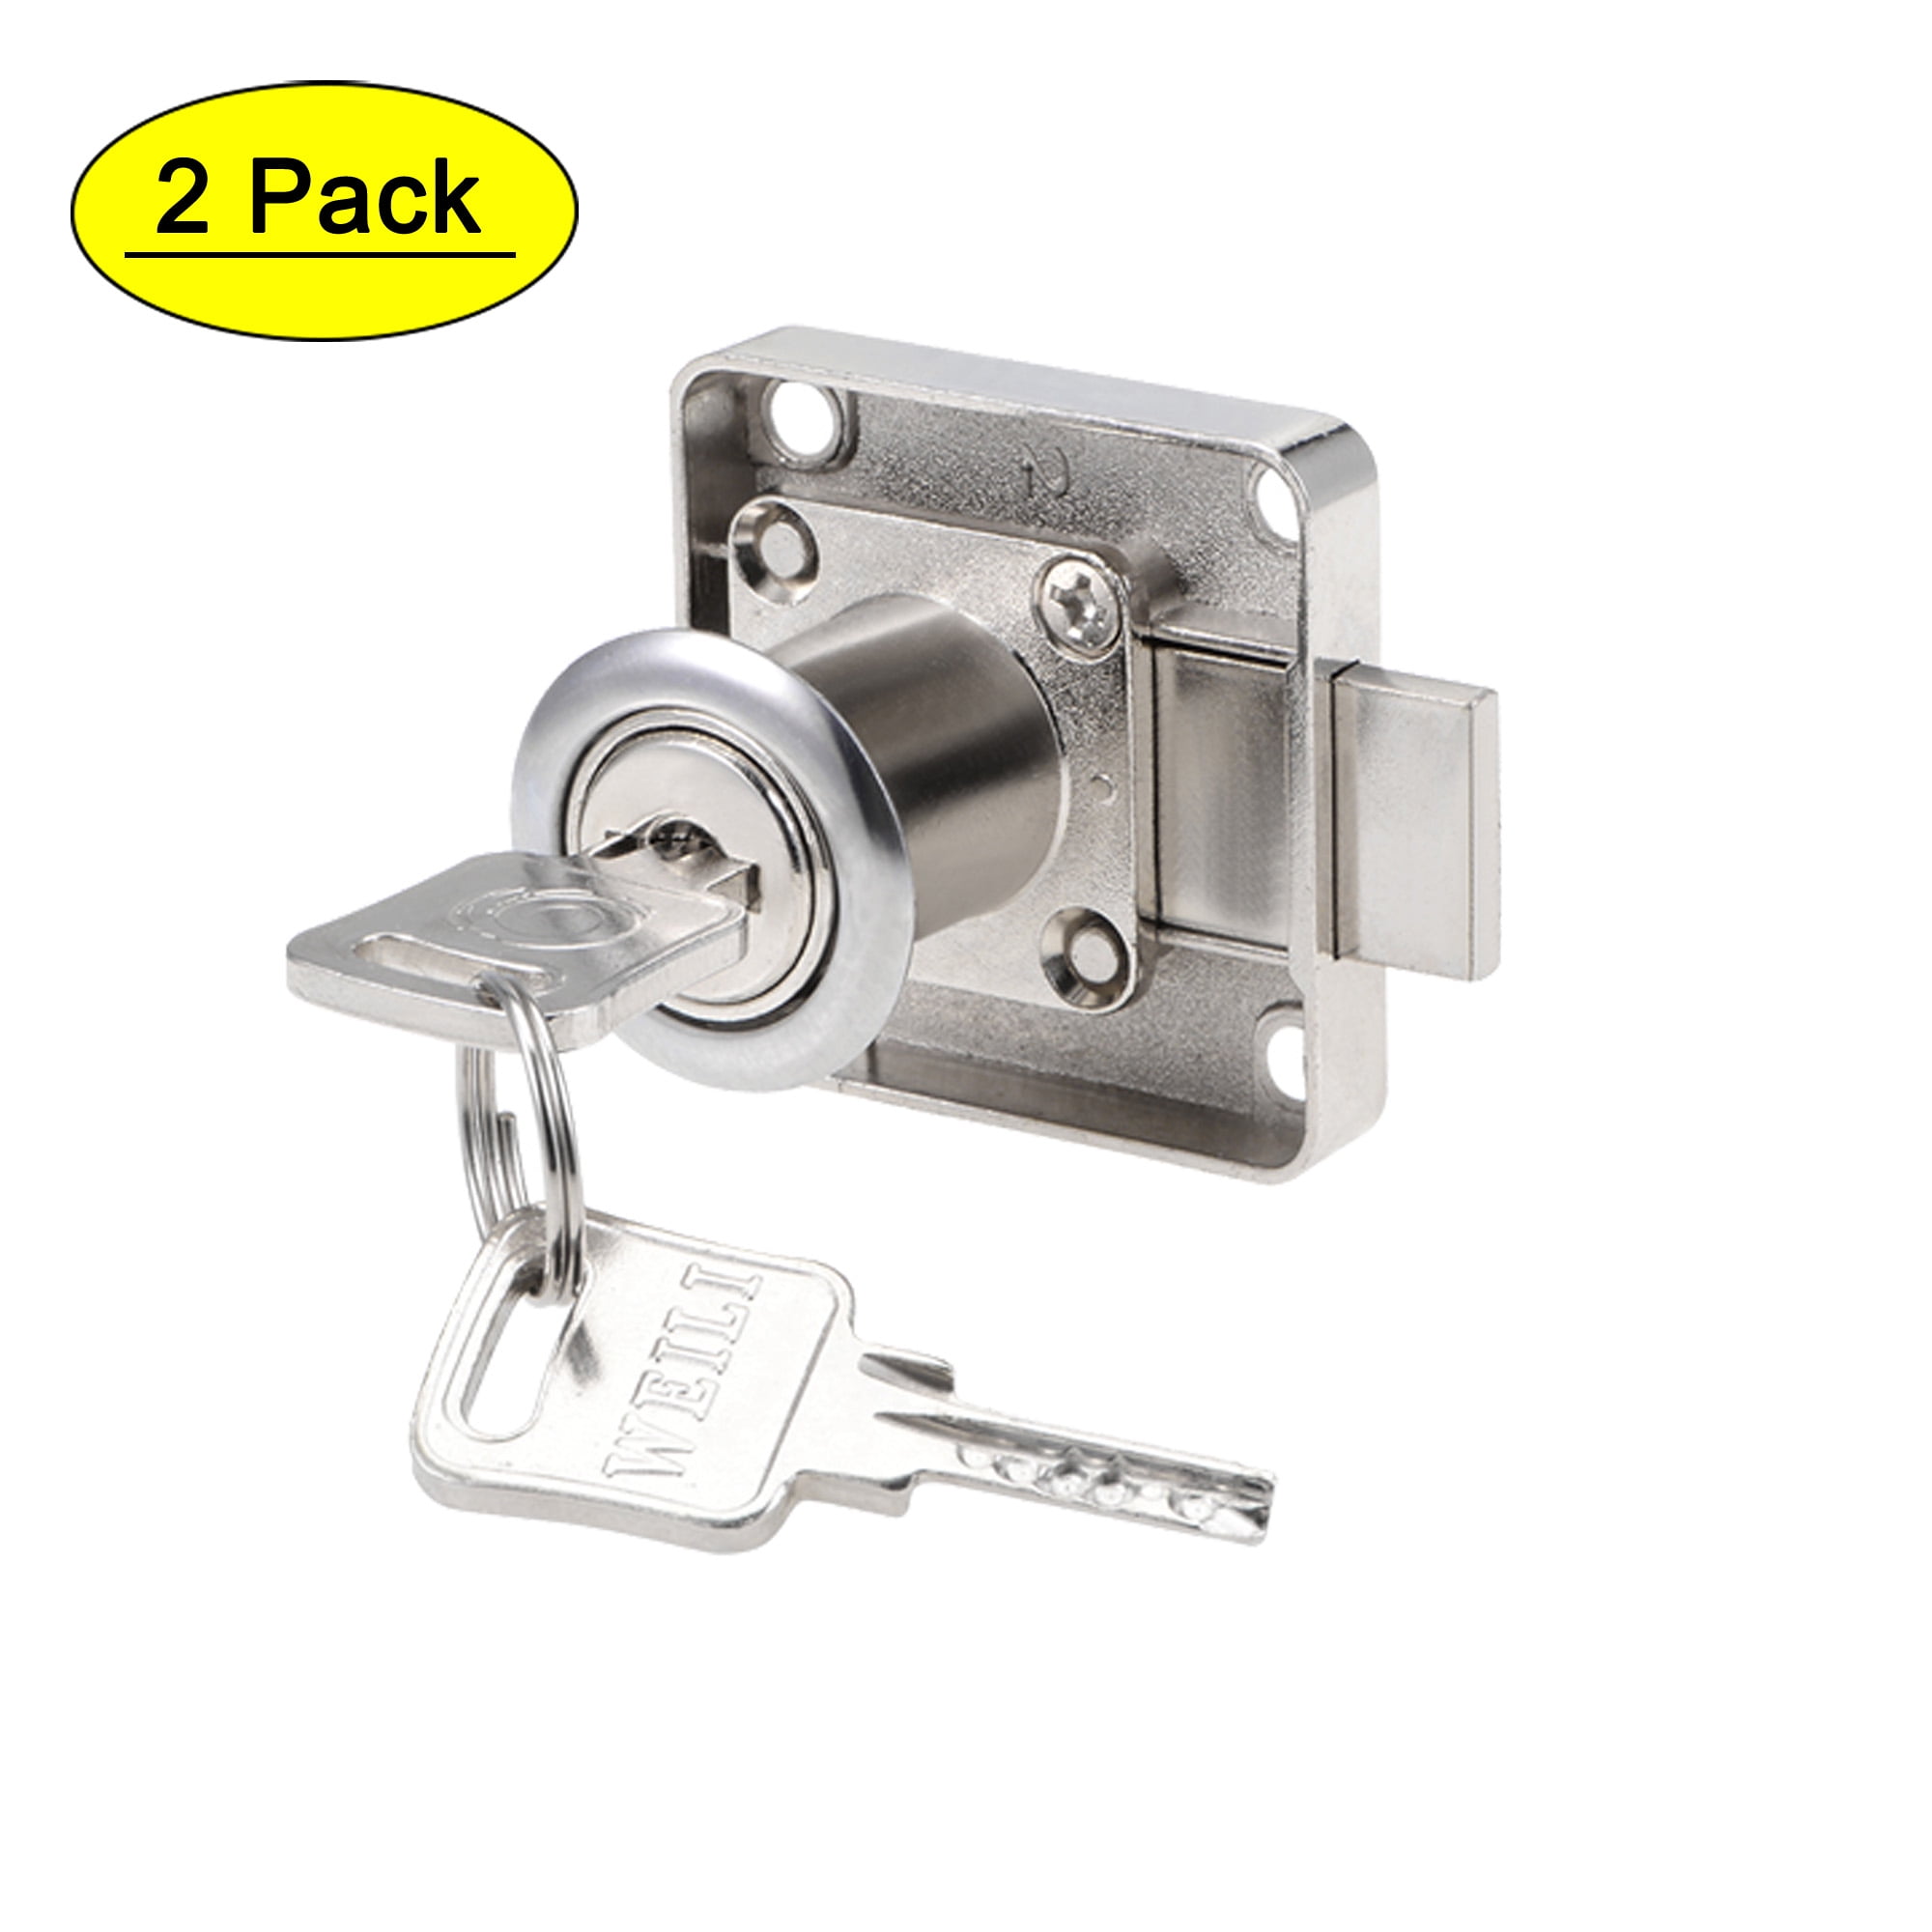 TXErfolg 2 Pack Furniture Lock Cylinder with Key Cupboard Drawer Zinc Alloy Cam Lock for Door Cabinet Mailbox Cupboard Drawer Locks